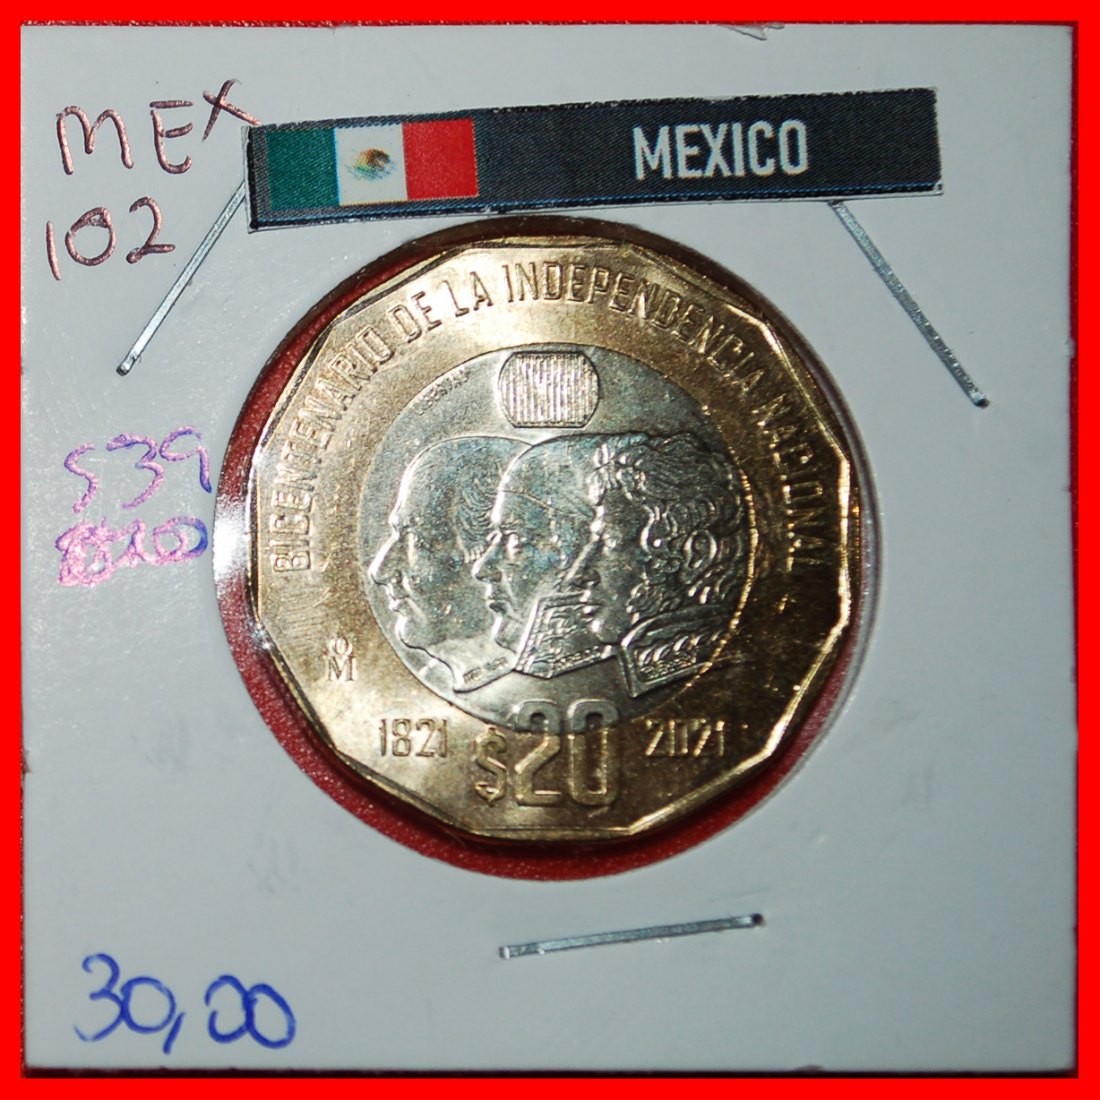  * FREEDOM: MEXICO ★20 PESOS 1821-2021! UNC MINT LUSTRE BI-METALLIC! IN HOLDER★LOW START★ NO RESERVE!   